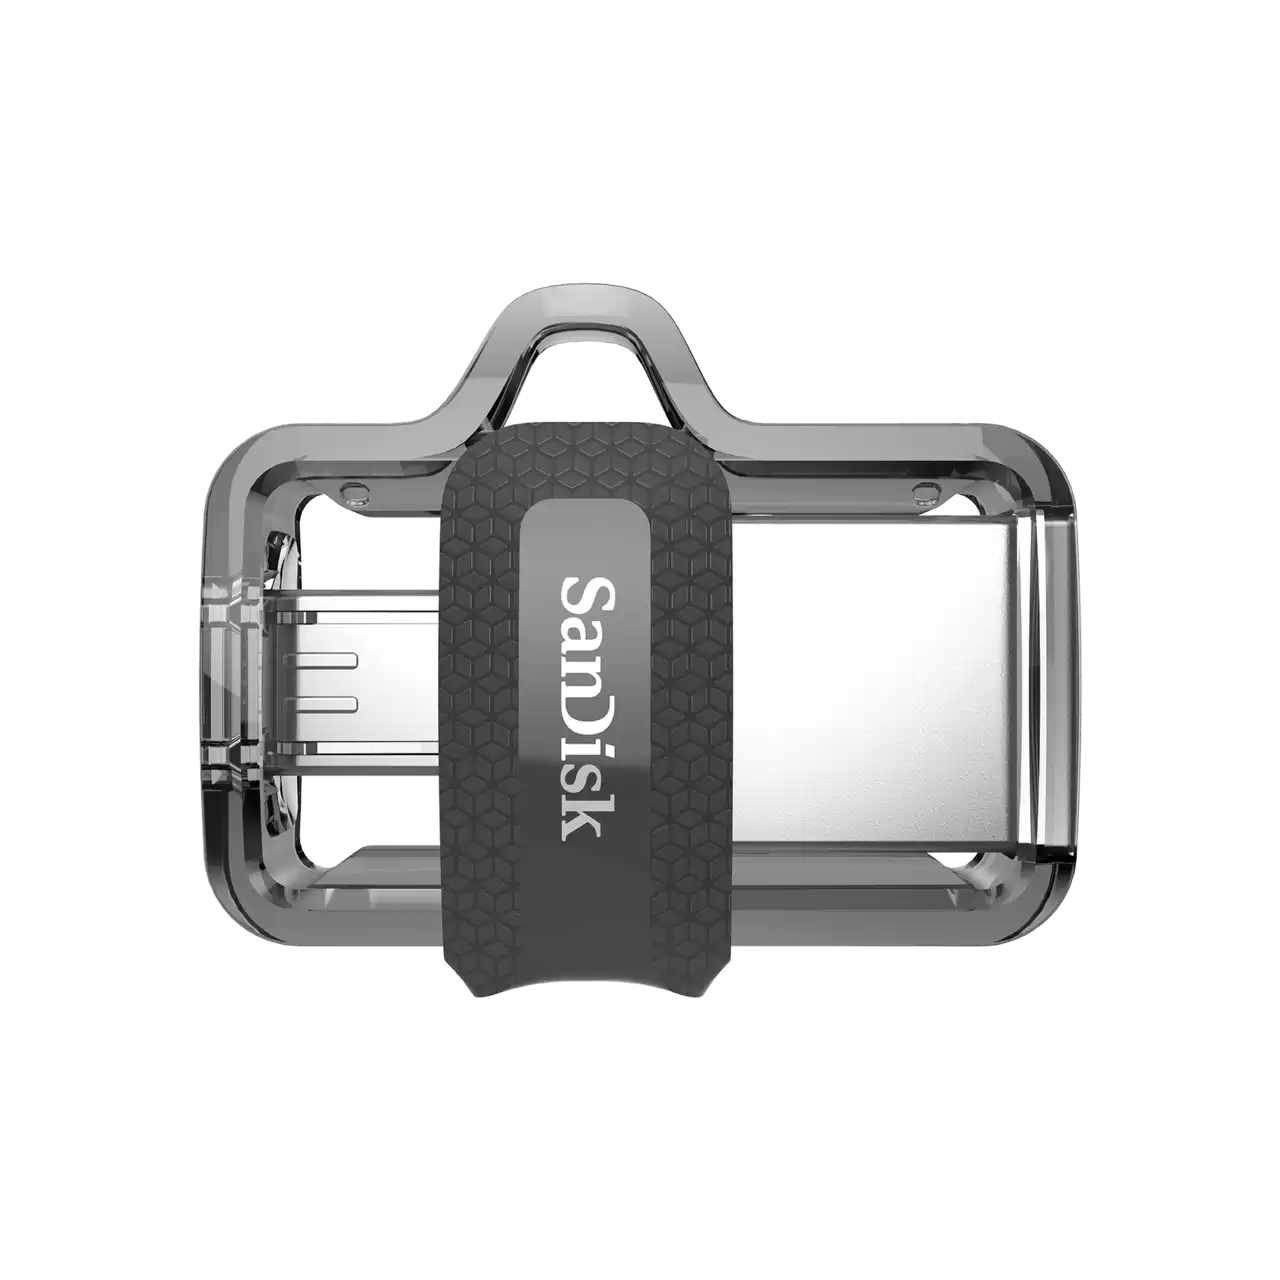 Sandisk Ultra Dual Drive M3.0 SDDD3